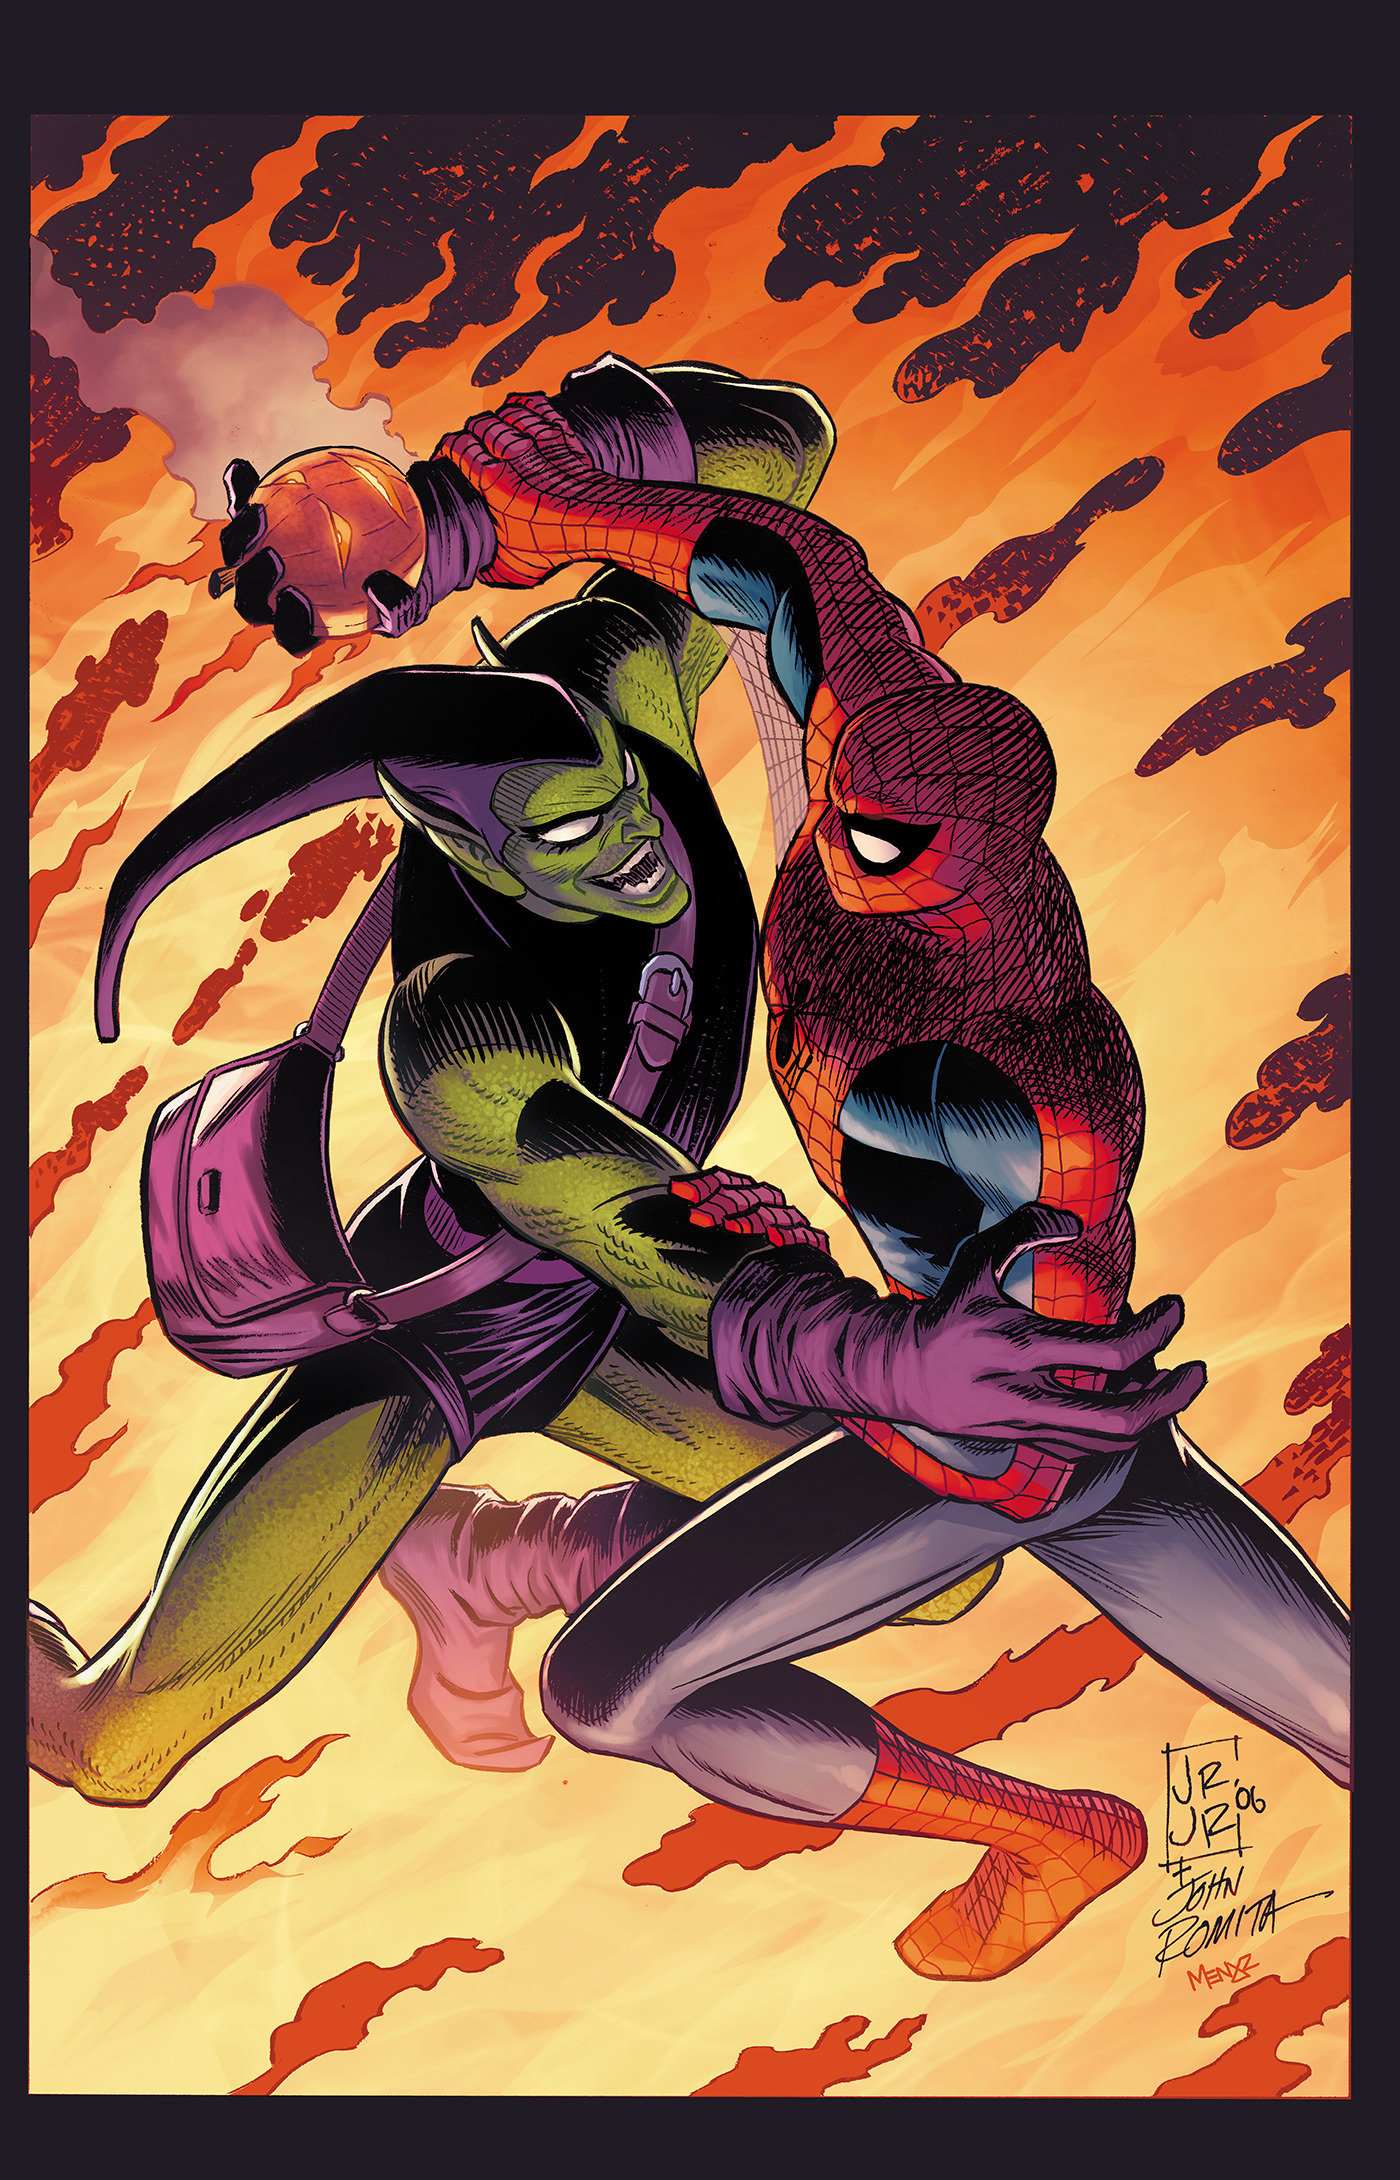 Amazing Spider-Man #36 John Romita Jr. & John Romita Sr. Virgin Variant 1 for 100 Incentive